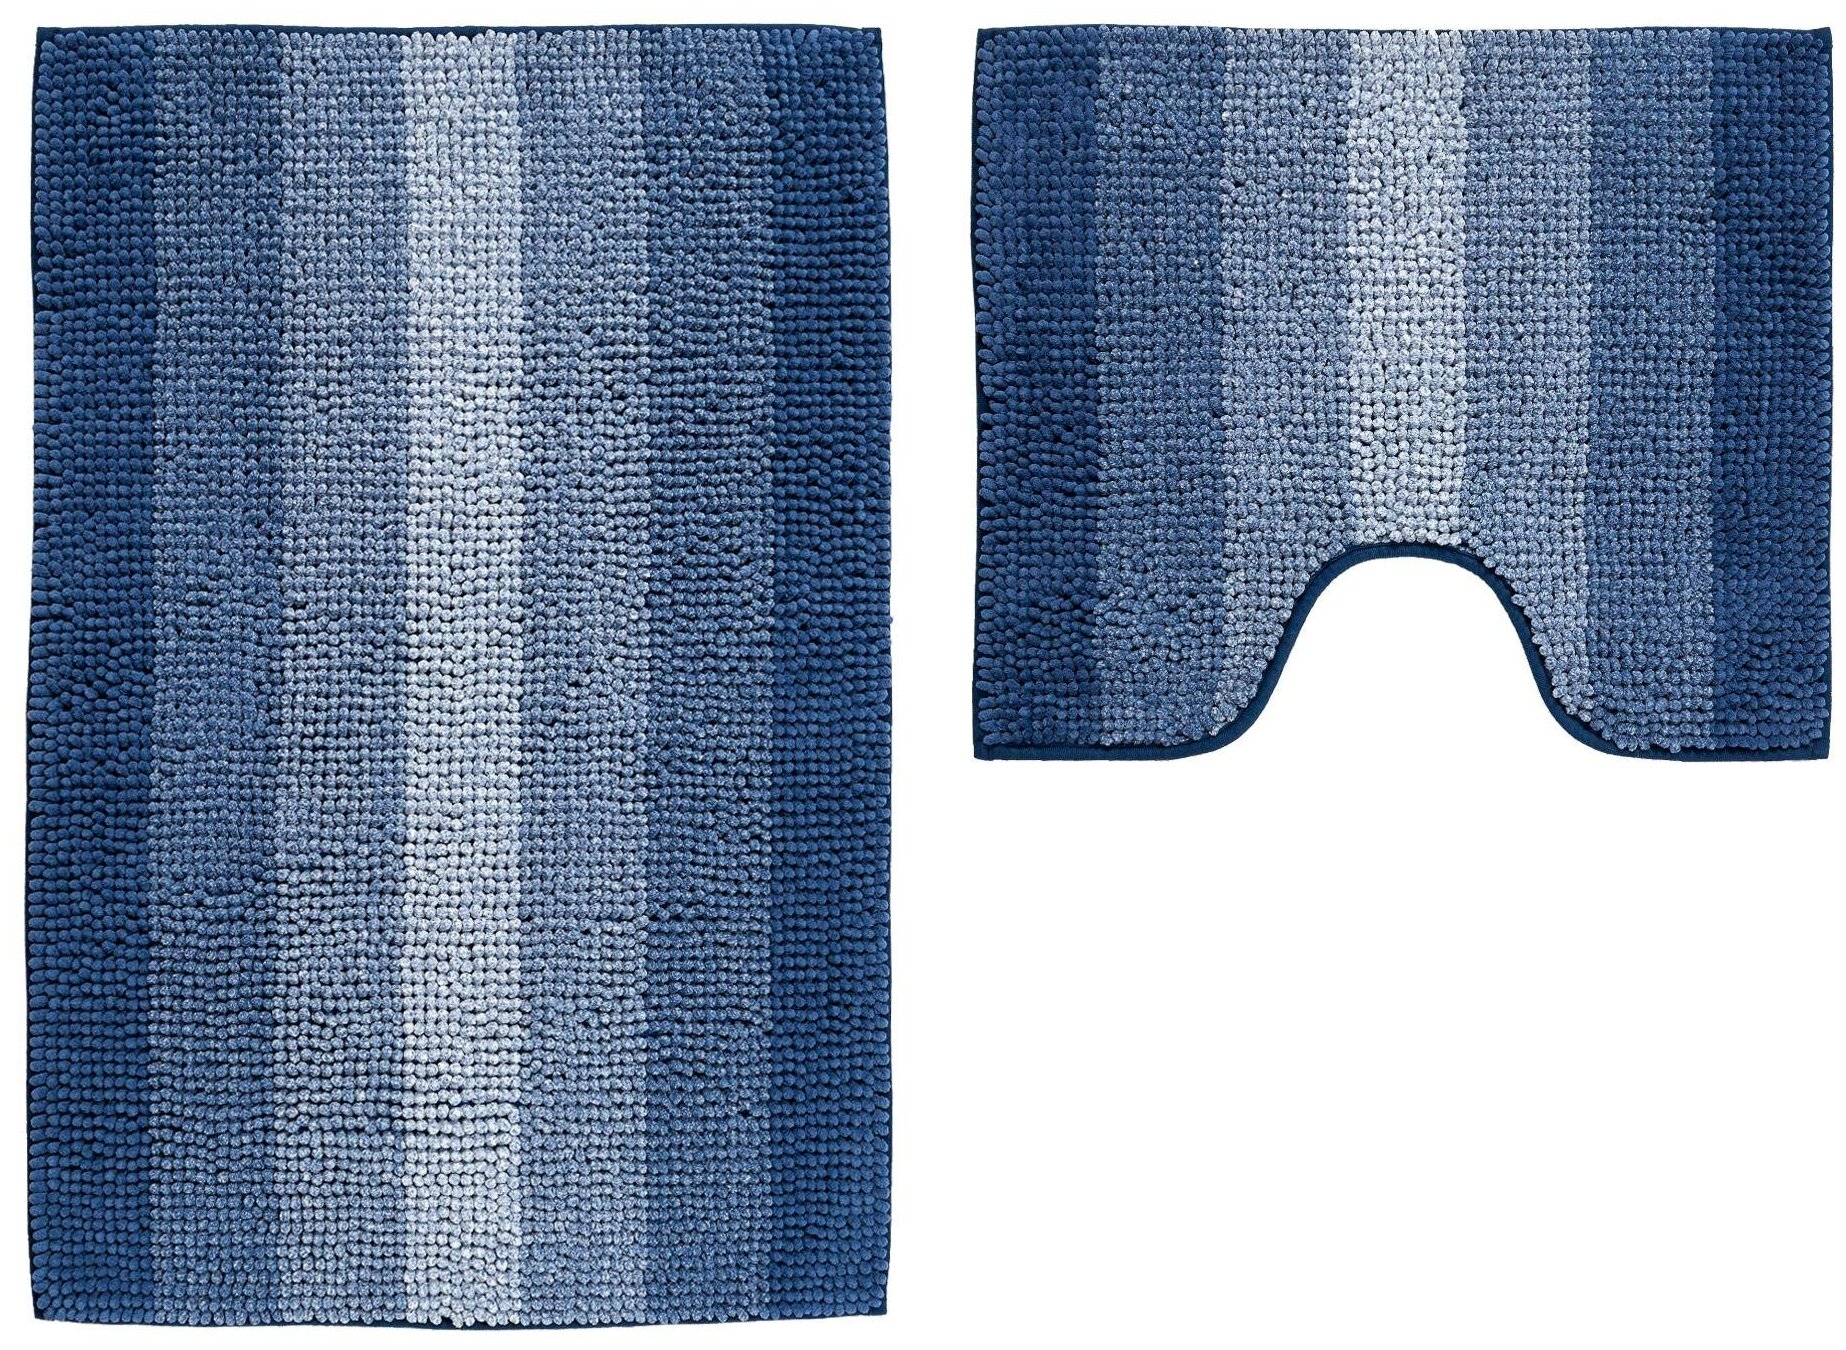 Набор ковриков д/ванной Shahintex Multimakaron 60*90+60*50 синий